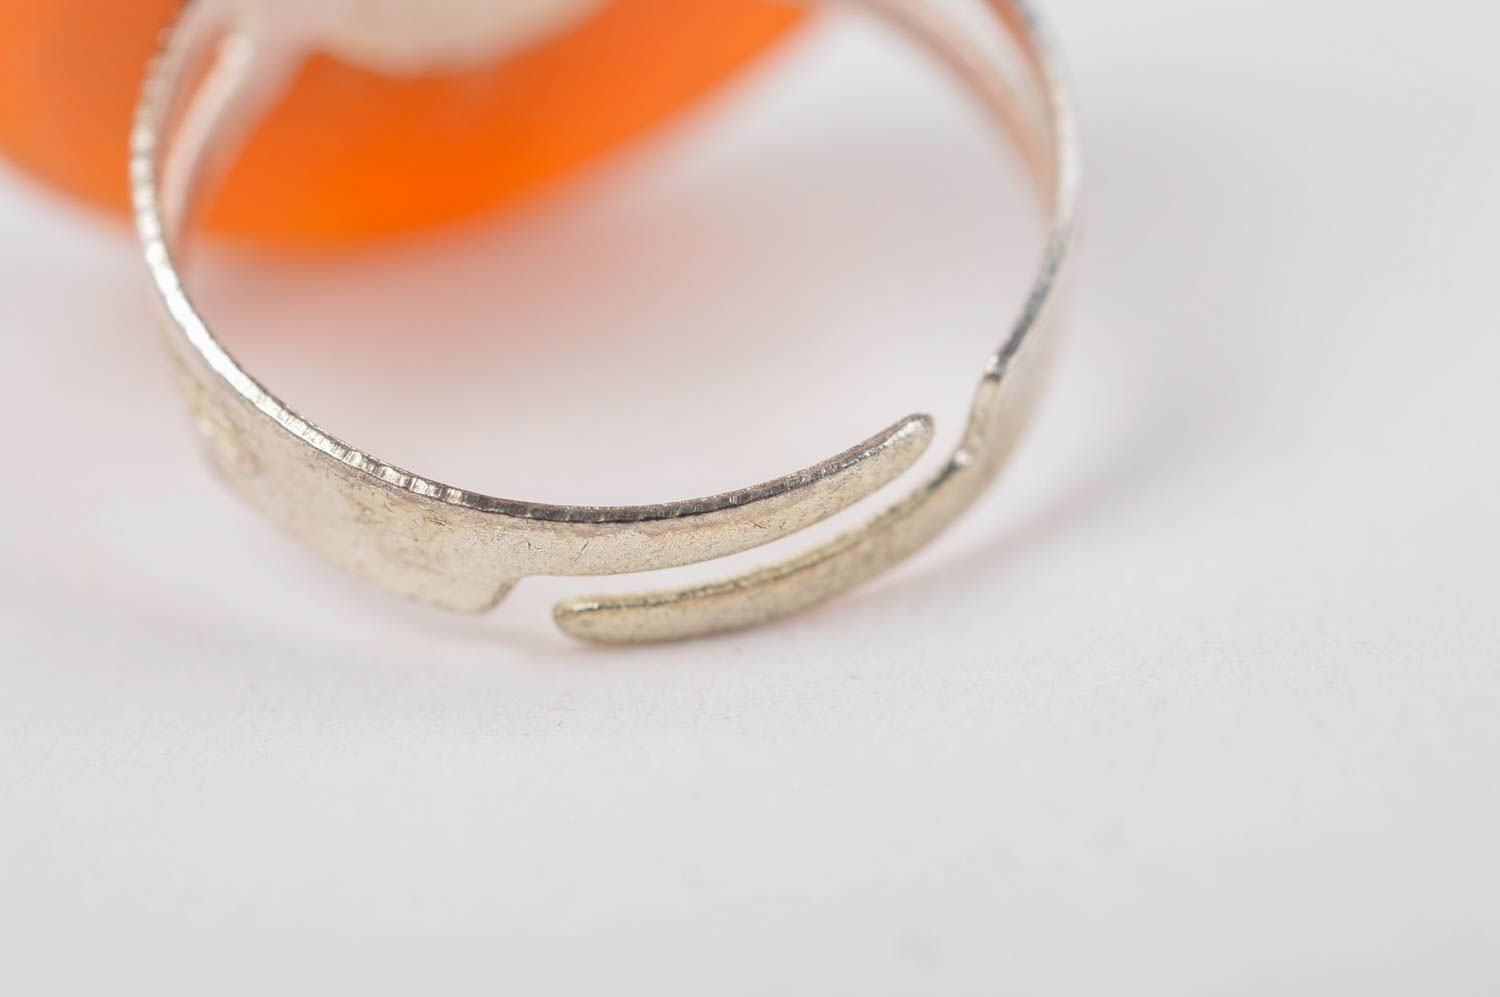 Beautiful handmade glass ring artisan jewelry designs fused glass ring photo 4